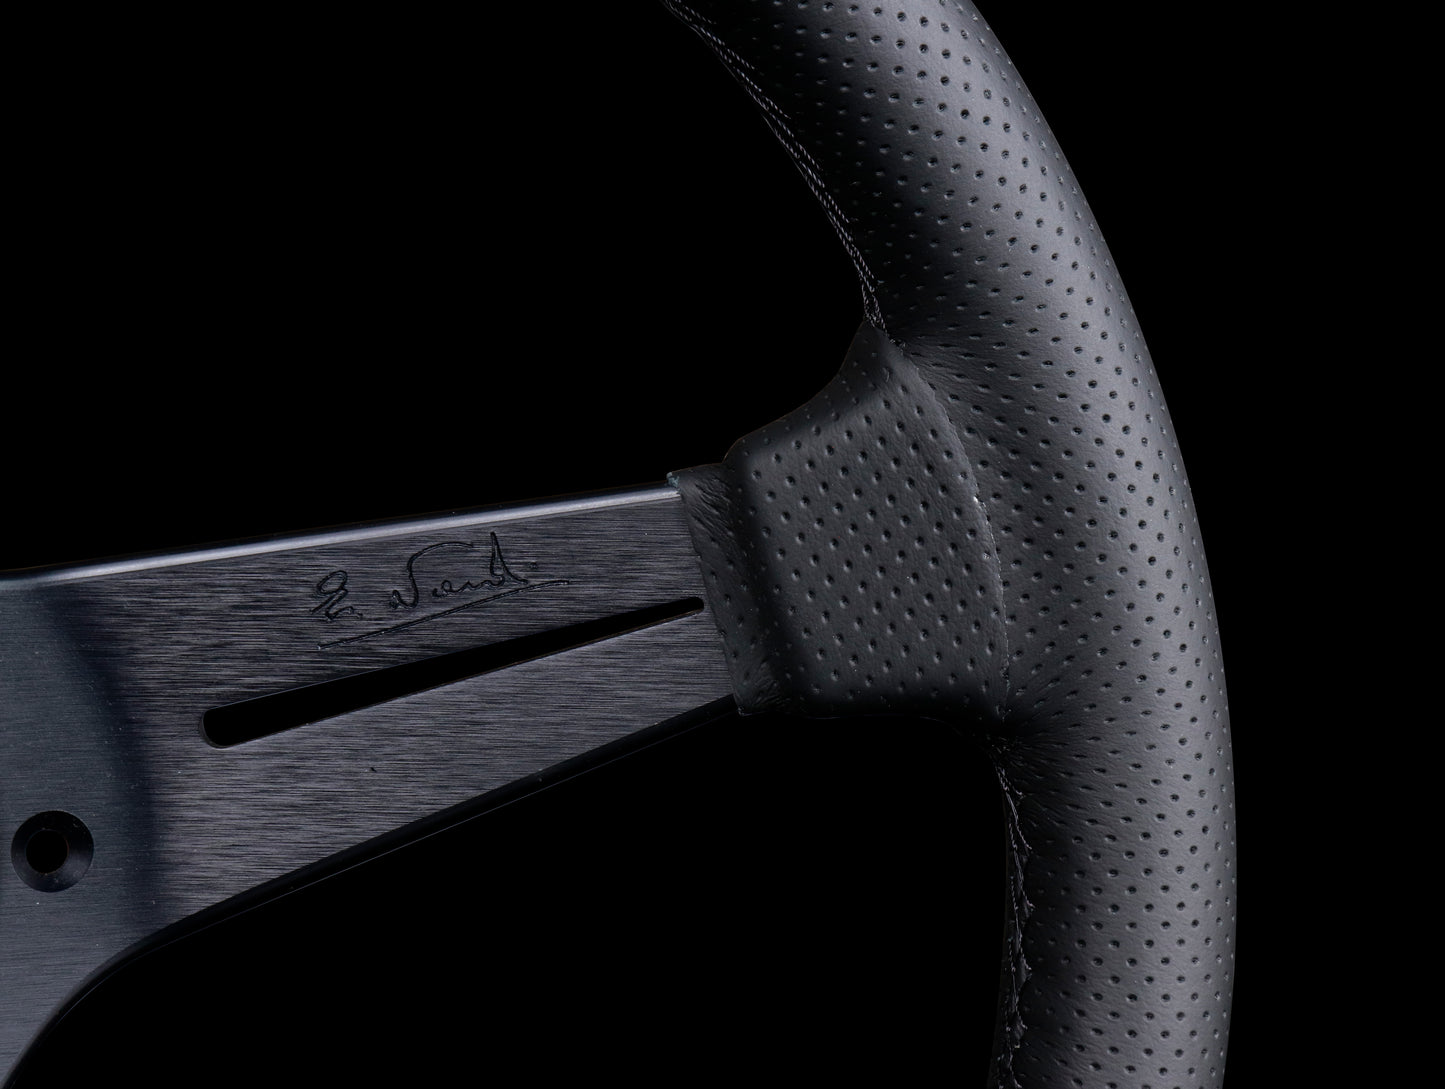 Nardi Sport Rally Deep Corn Black Edition Steering Wheel - 350mm Perforated Leather / Black Stitch